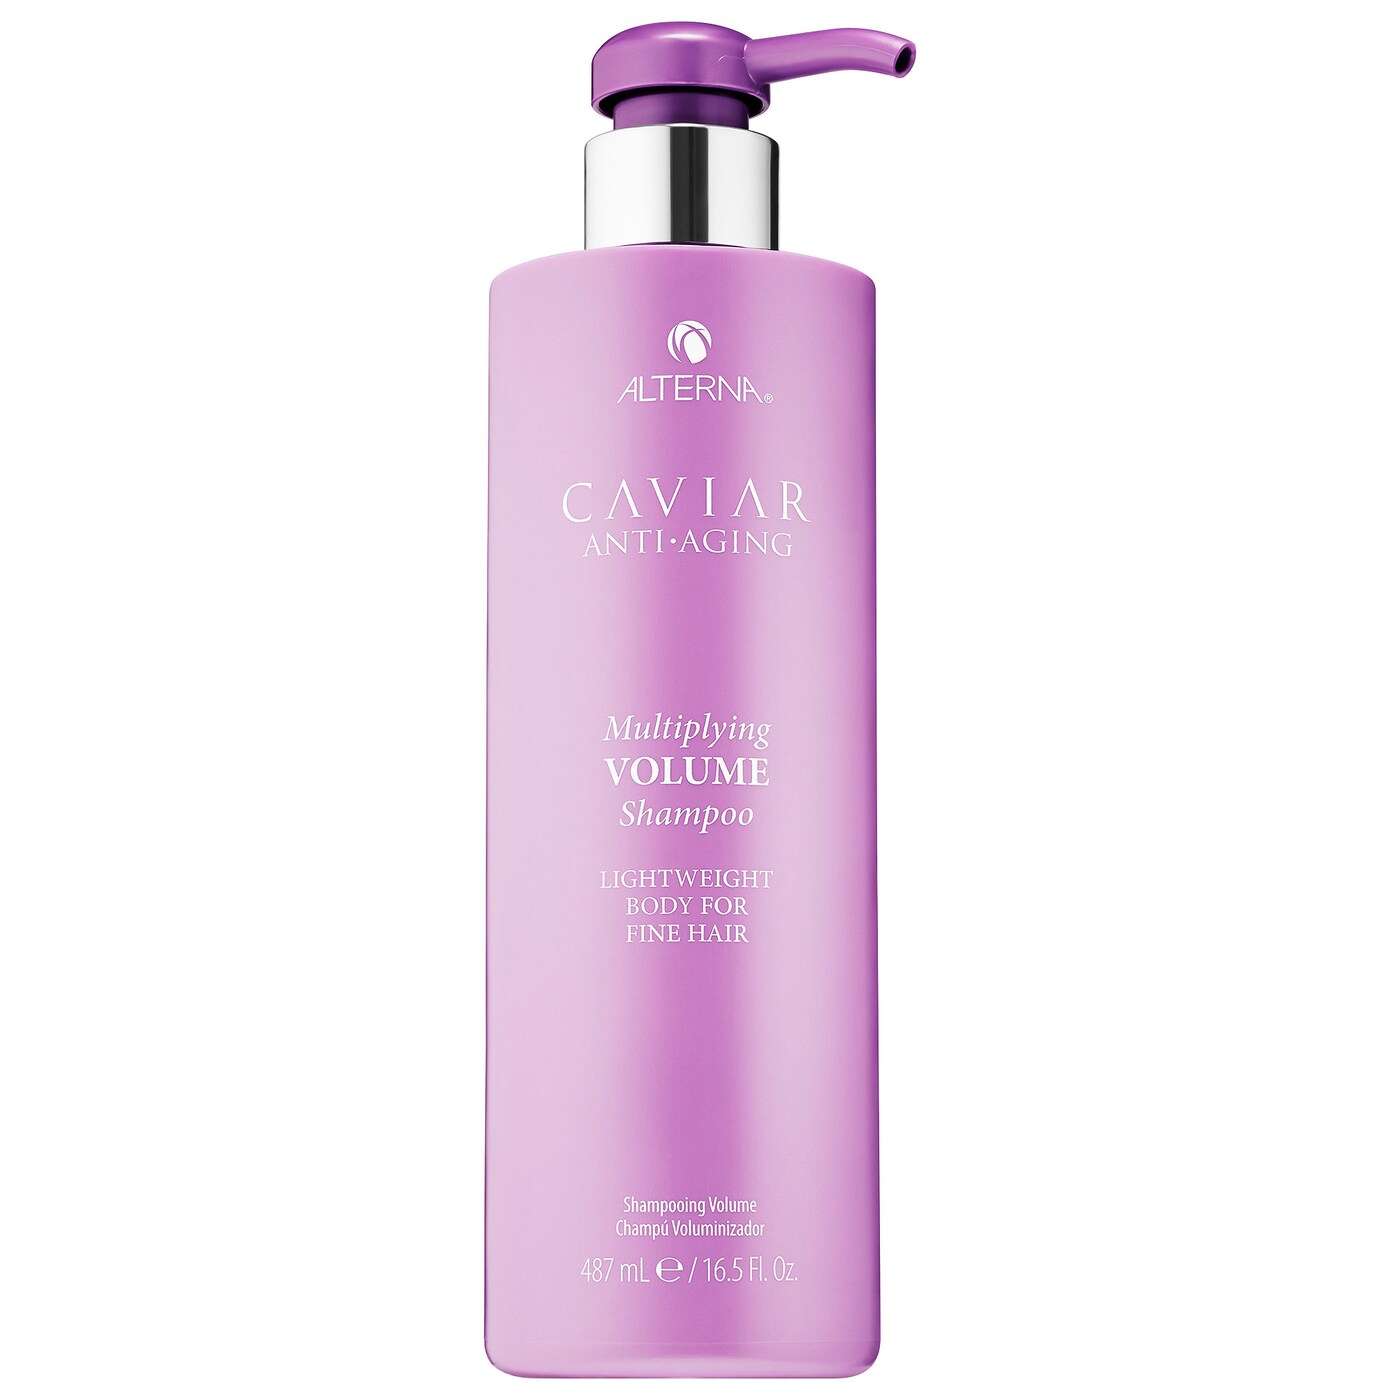 ALTERNA CAVIAR Anti-Aging Multiplying Volume Shampoo 488ml